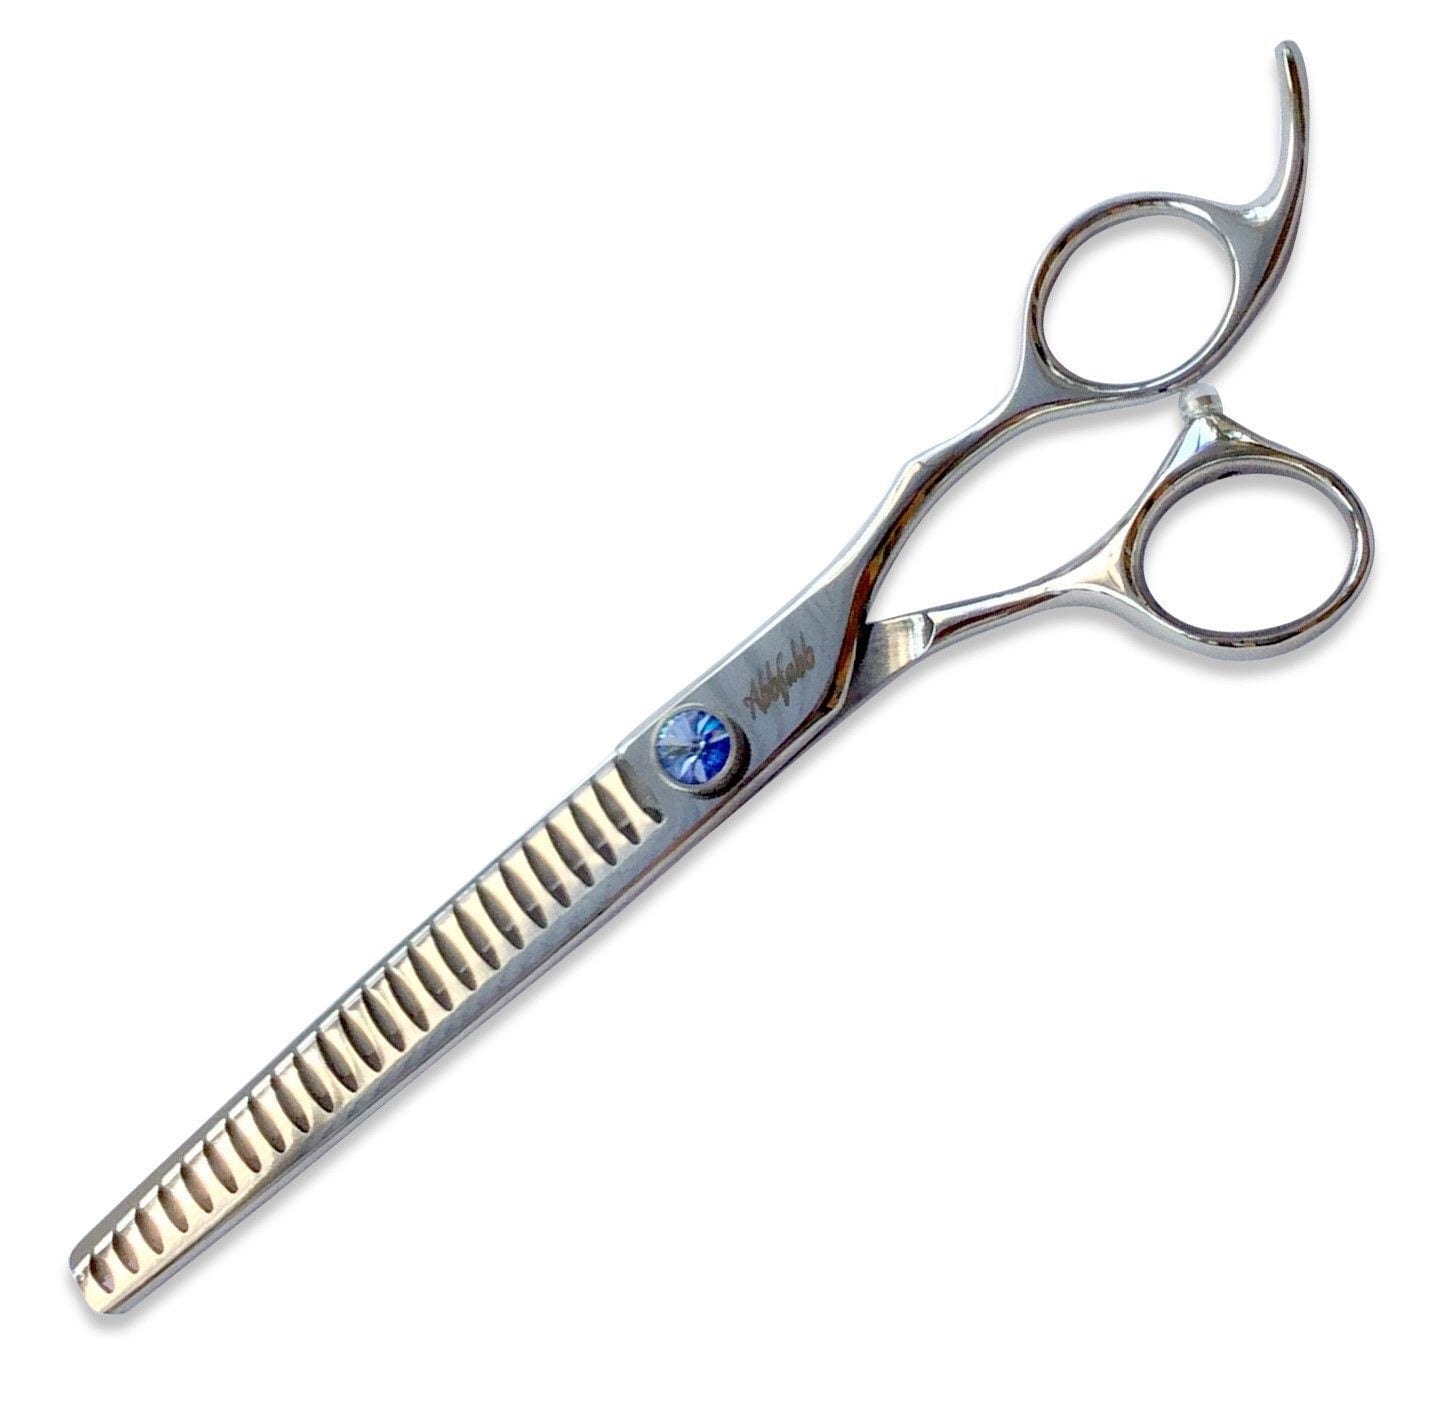 Abbfabb Grooming Scissors Ltd 7.5” 24 Teeth Texturising Dog Grooming Scissor